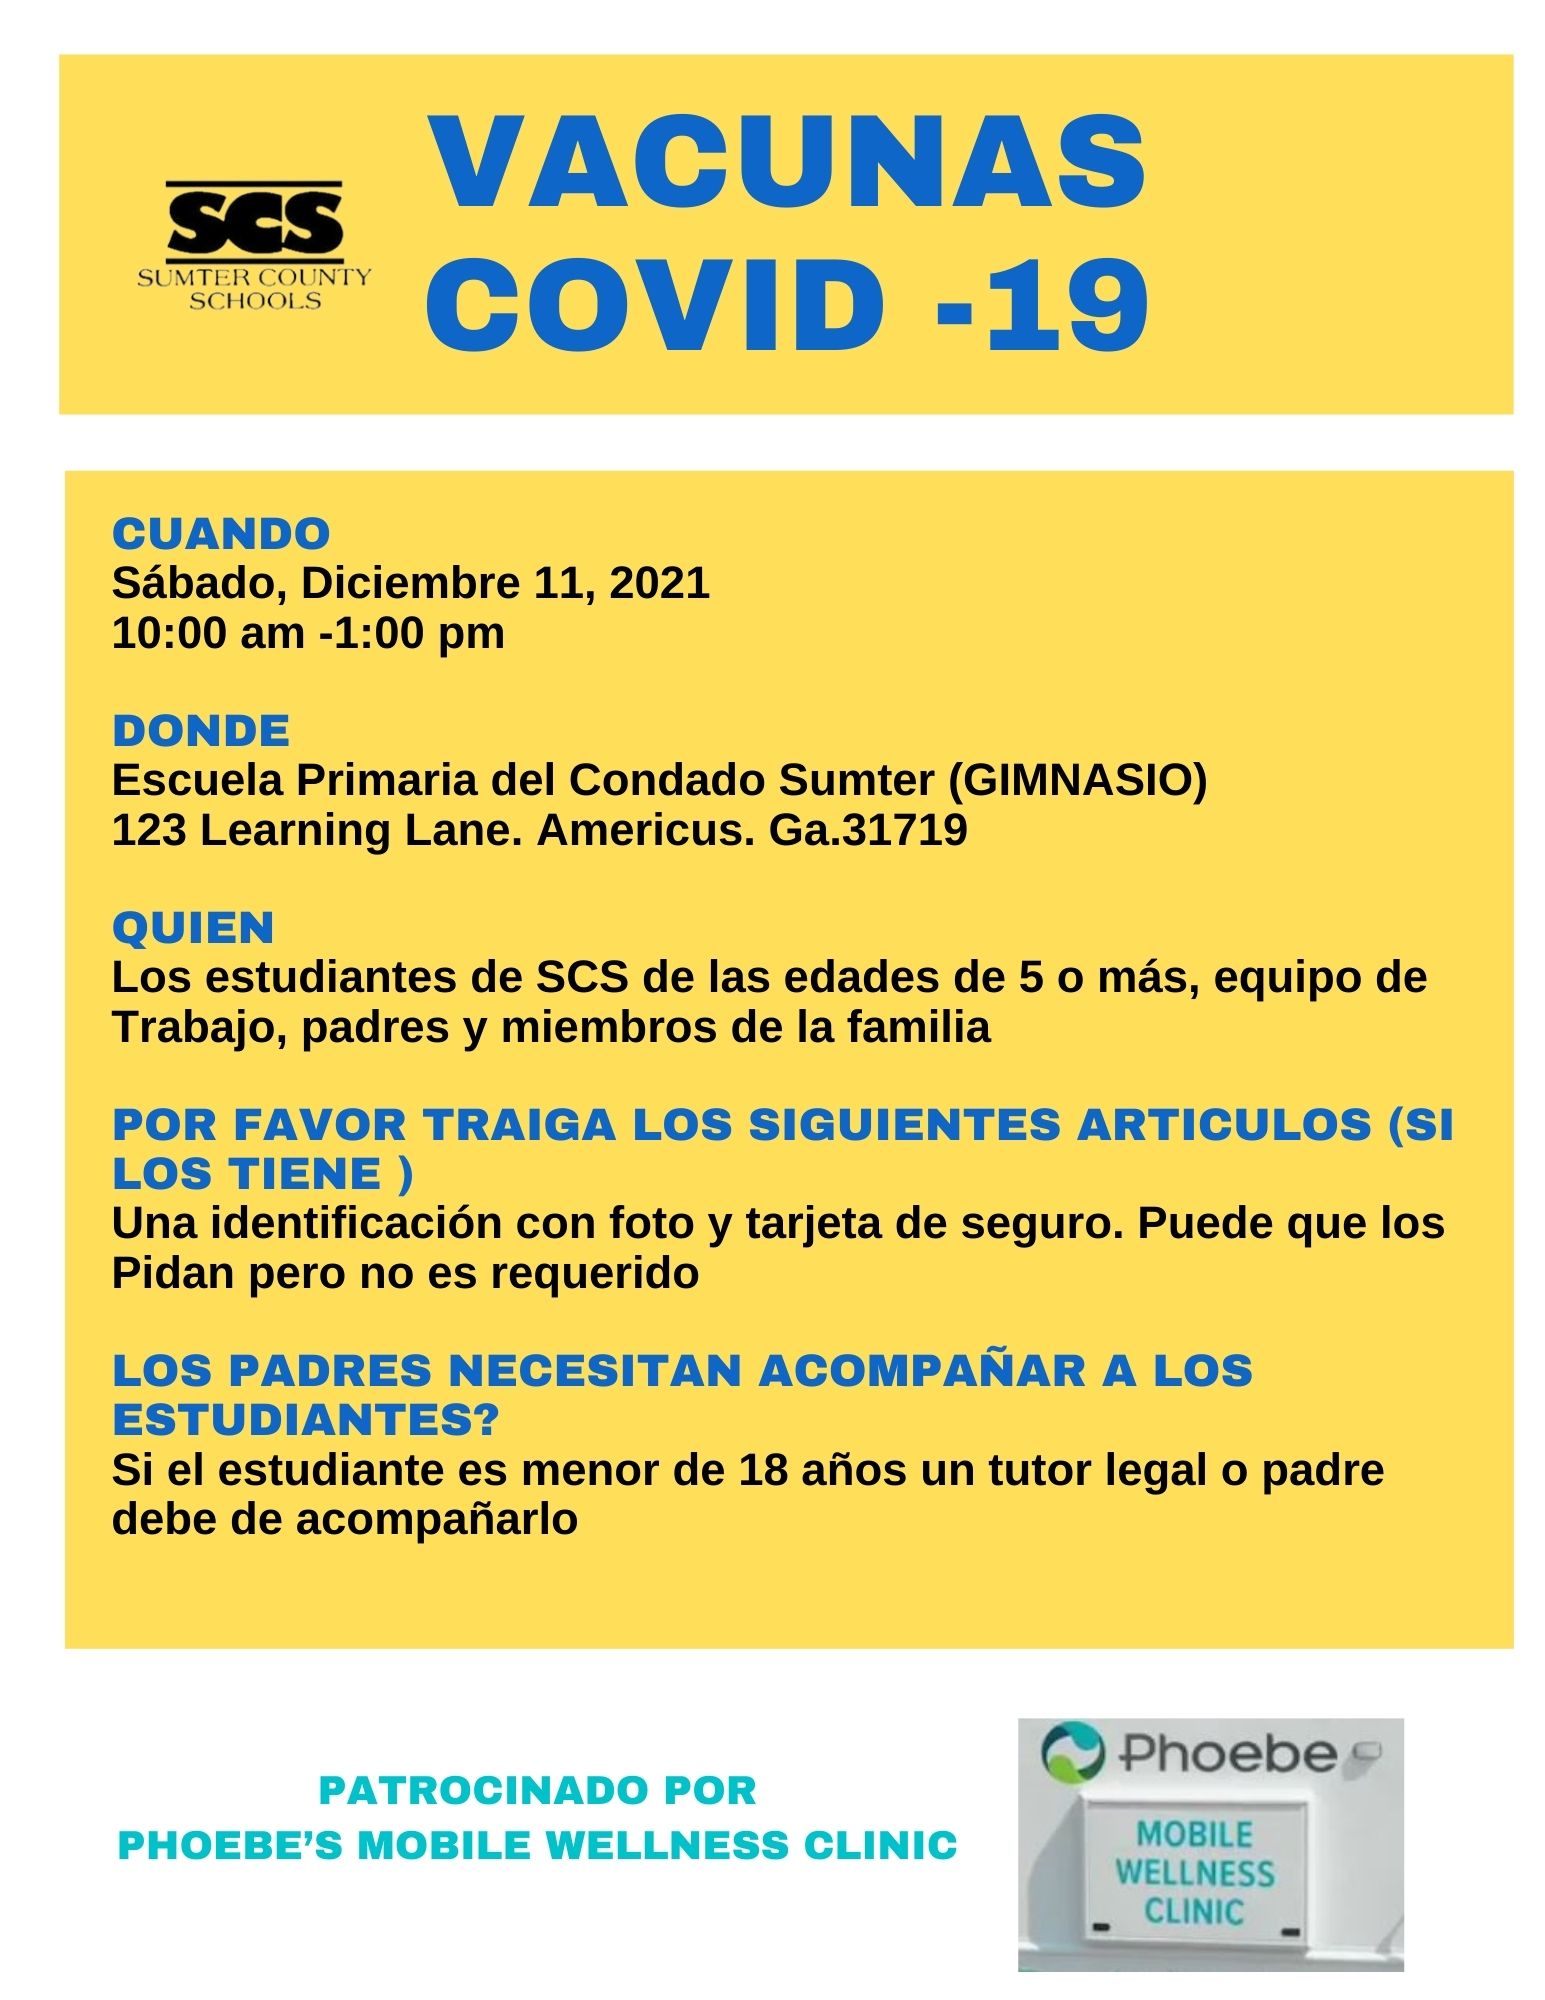 Covid-19 Vaccines Spanish